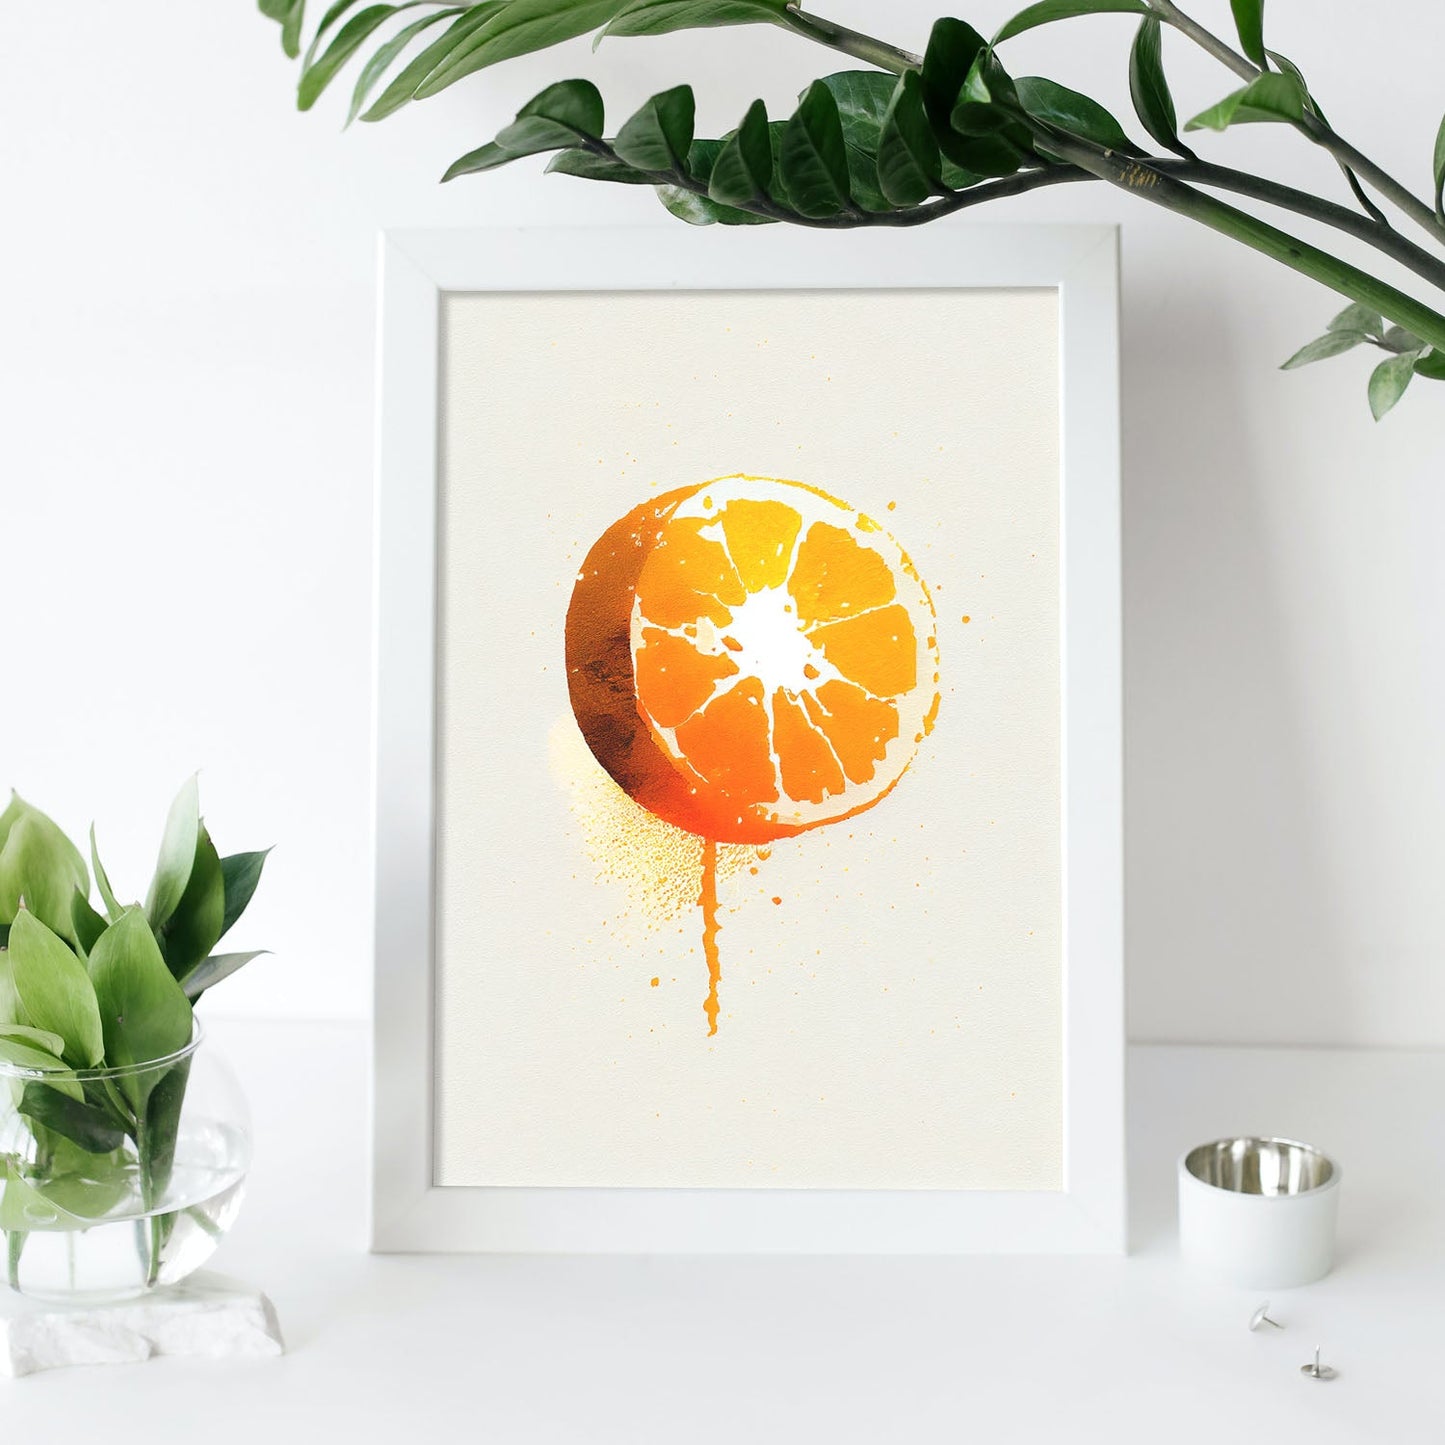 Nacnic minimalist Orange_2. Aesthetic Wall Art Prints for Bedroom or Living Room Design.